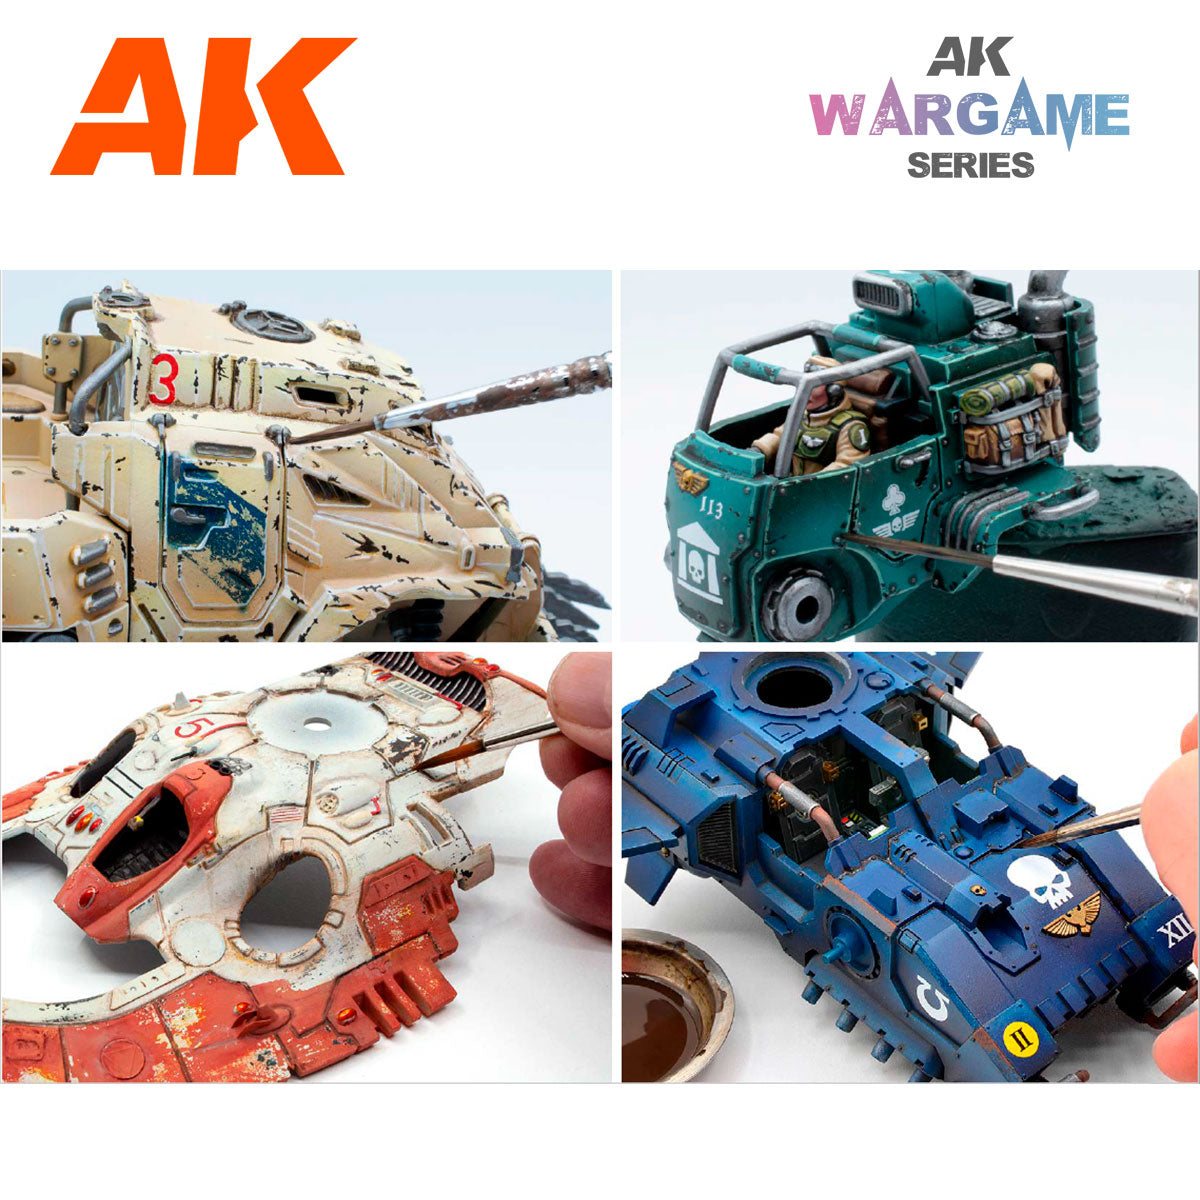 AK Interactive - Wargames Washes - Violet Wash 35 mL - Lootbox